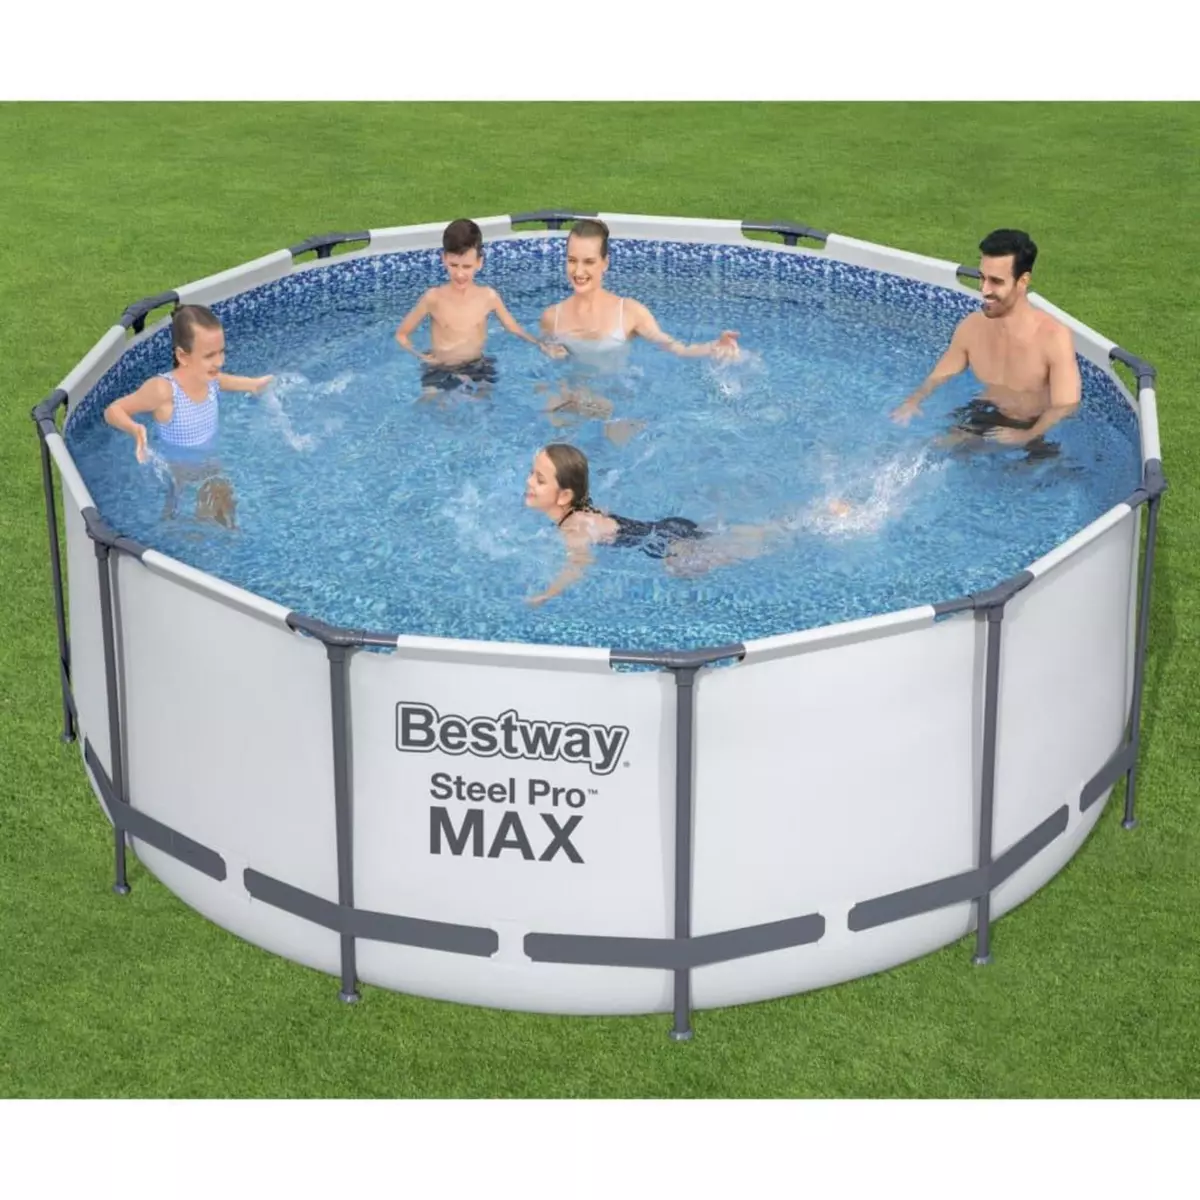 BESTWAY Bestway Ensemble de piscine Steel Pro MAX Rond 366x122 cm